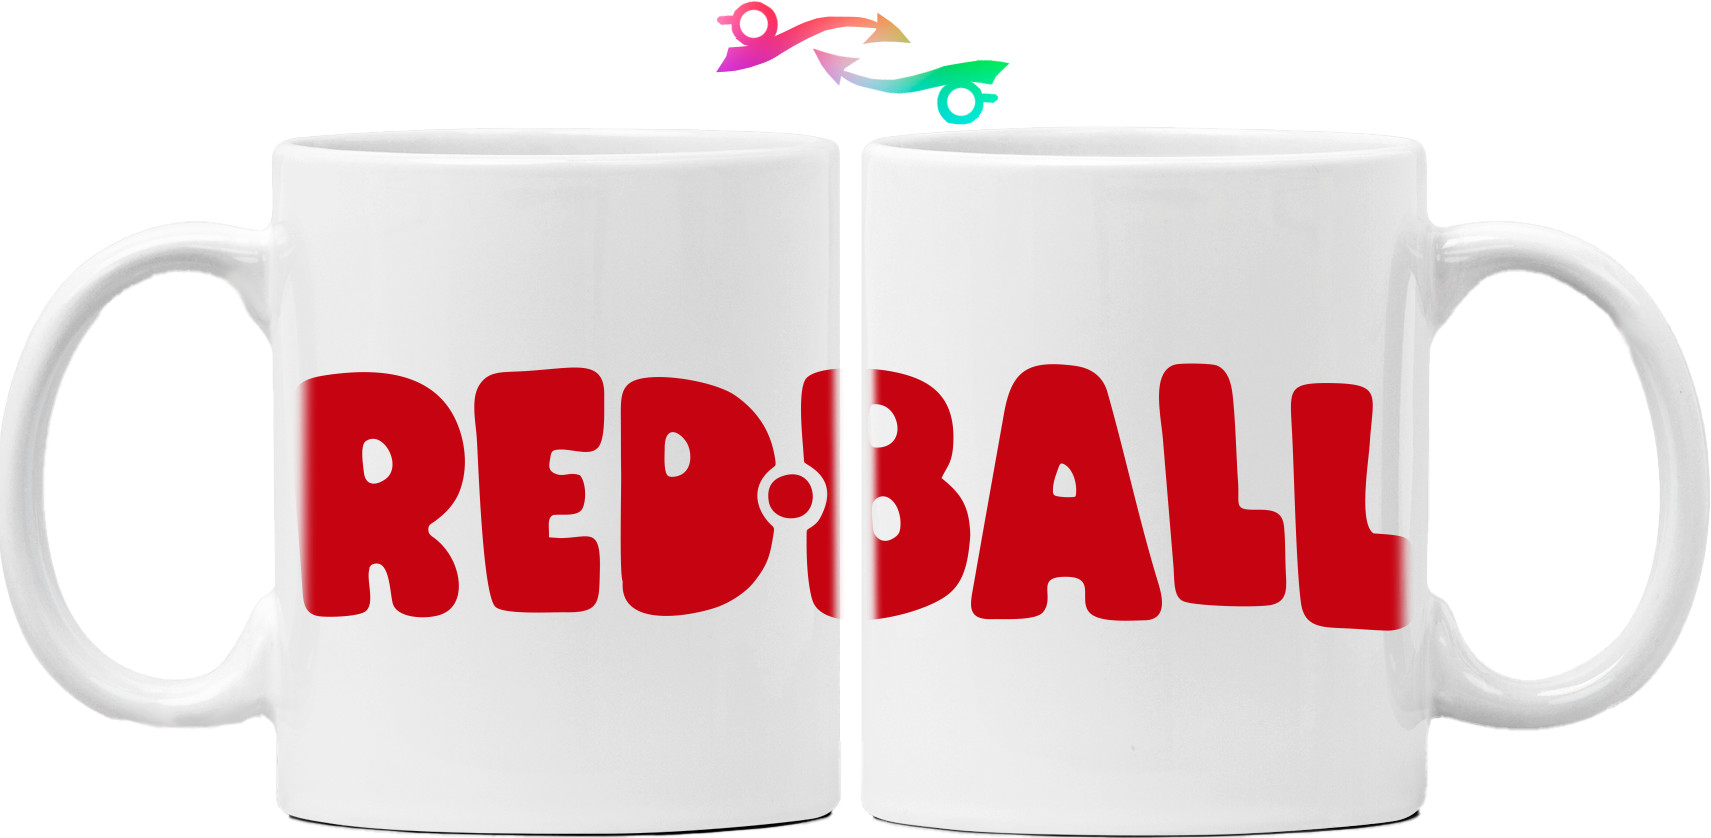 red ball logo